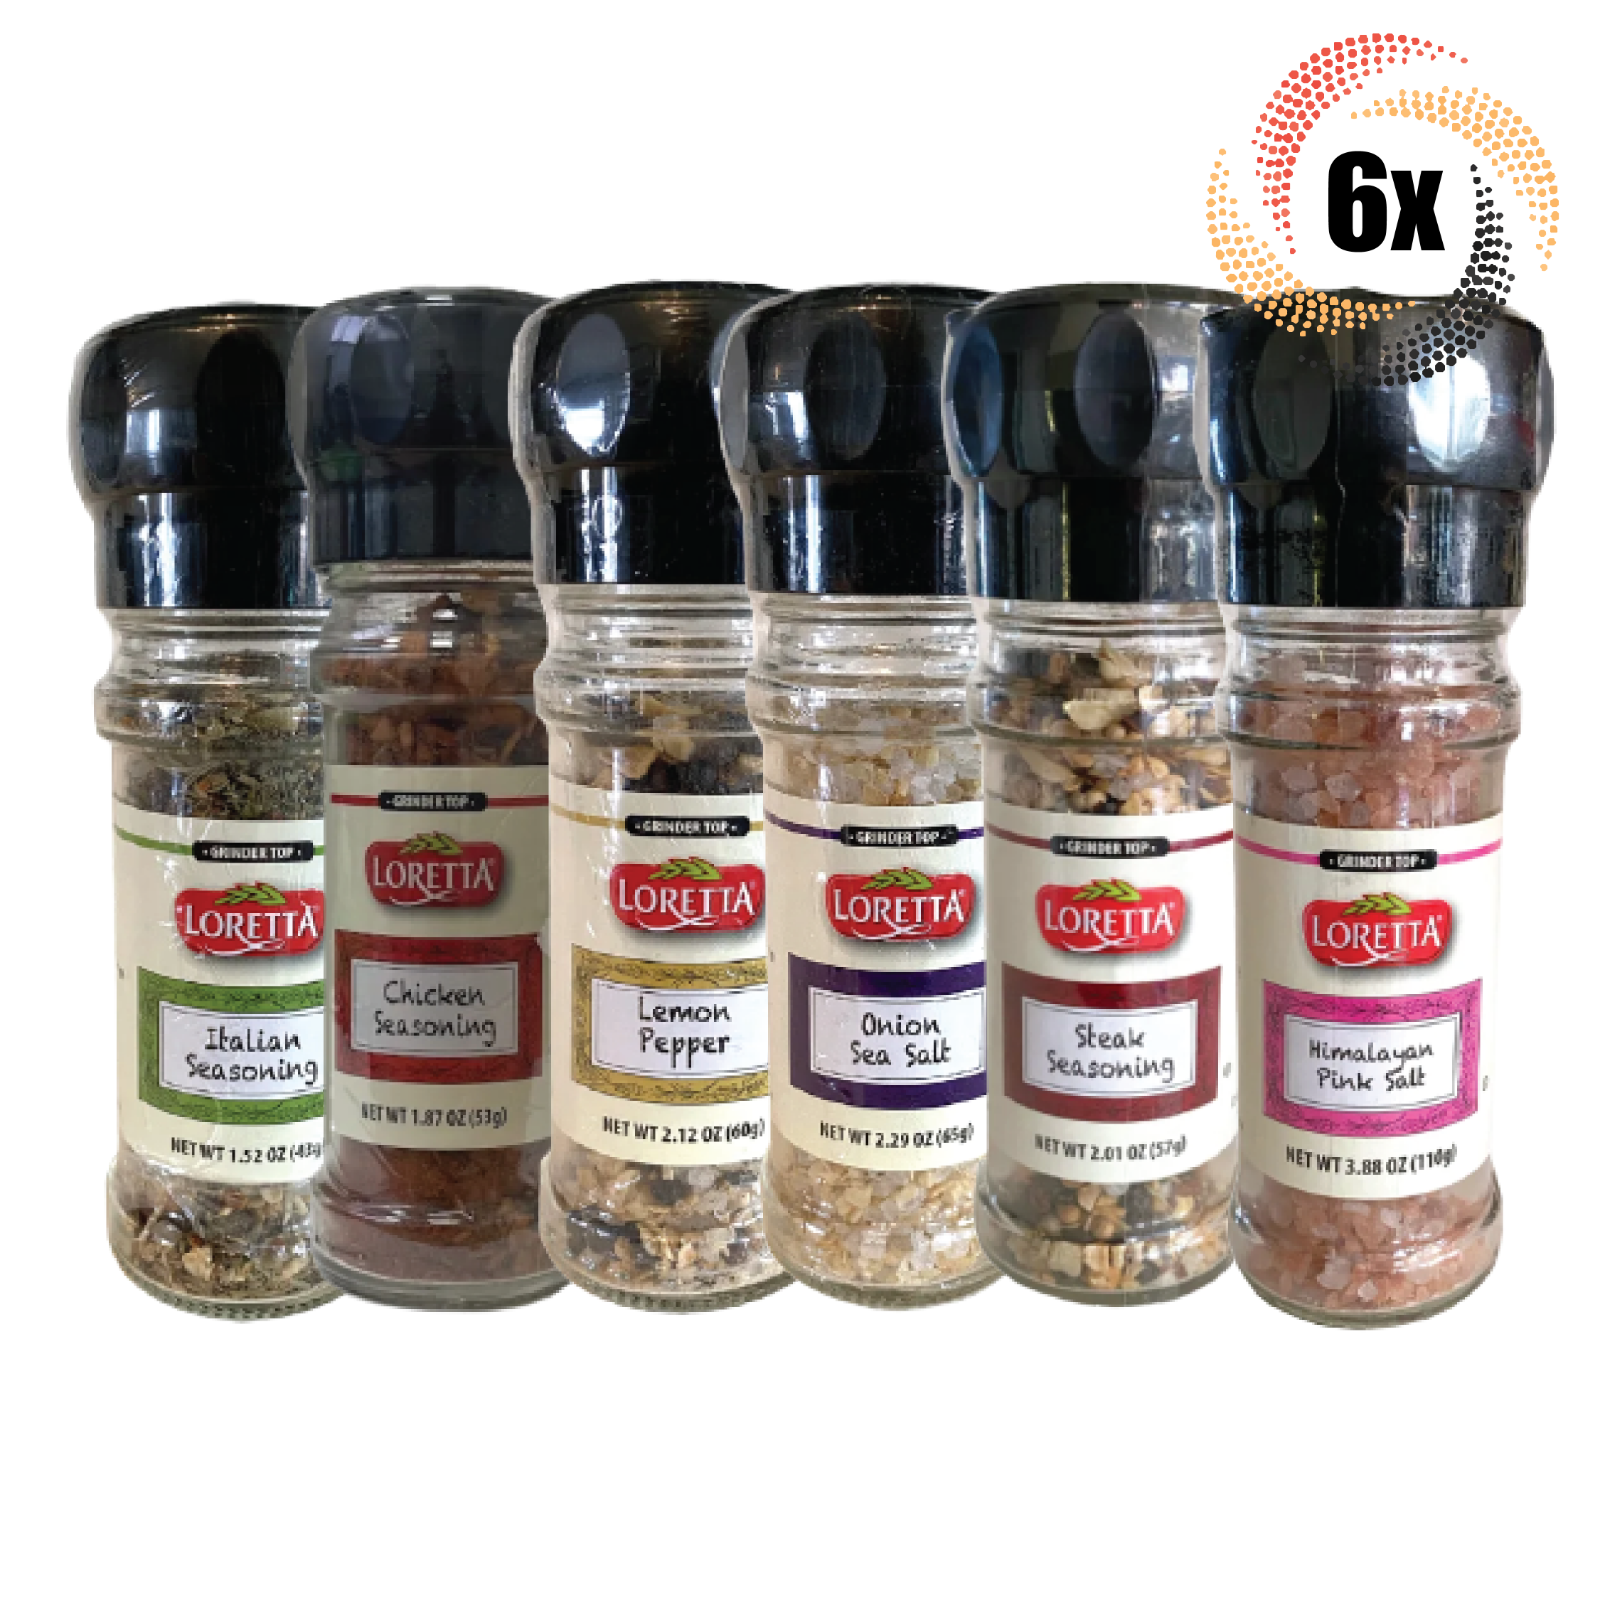 6x Grinders Loretta Variety Flavor Seasoning & Salt | Mix & Match Flavors! | - $21.98